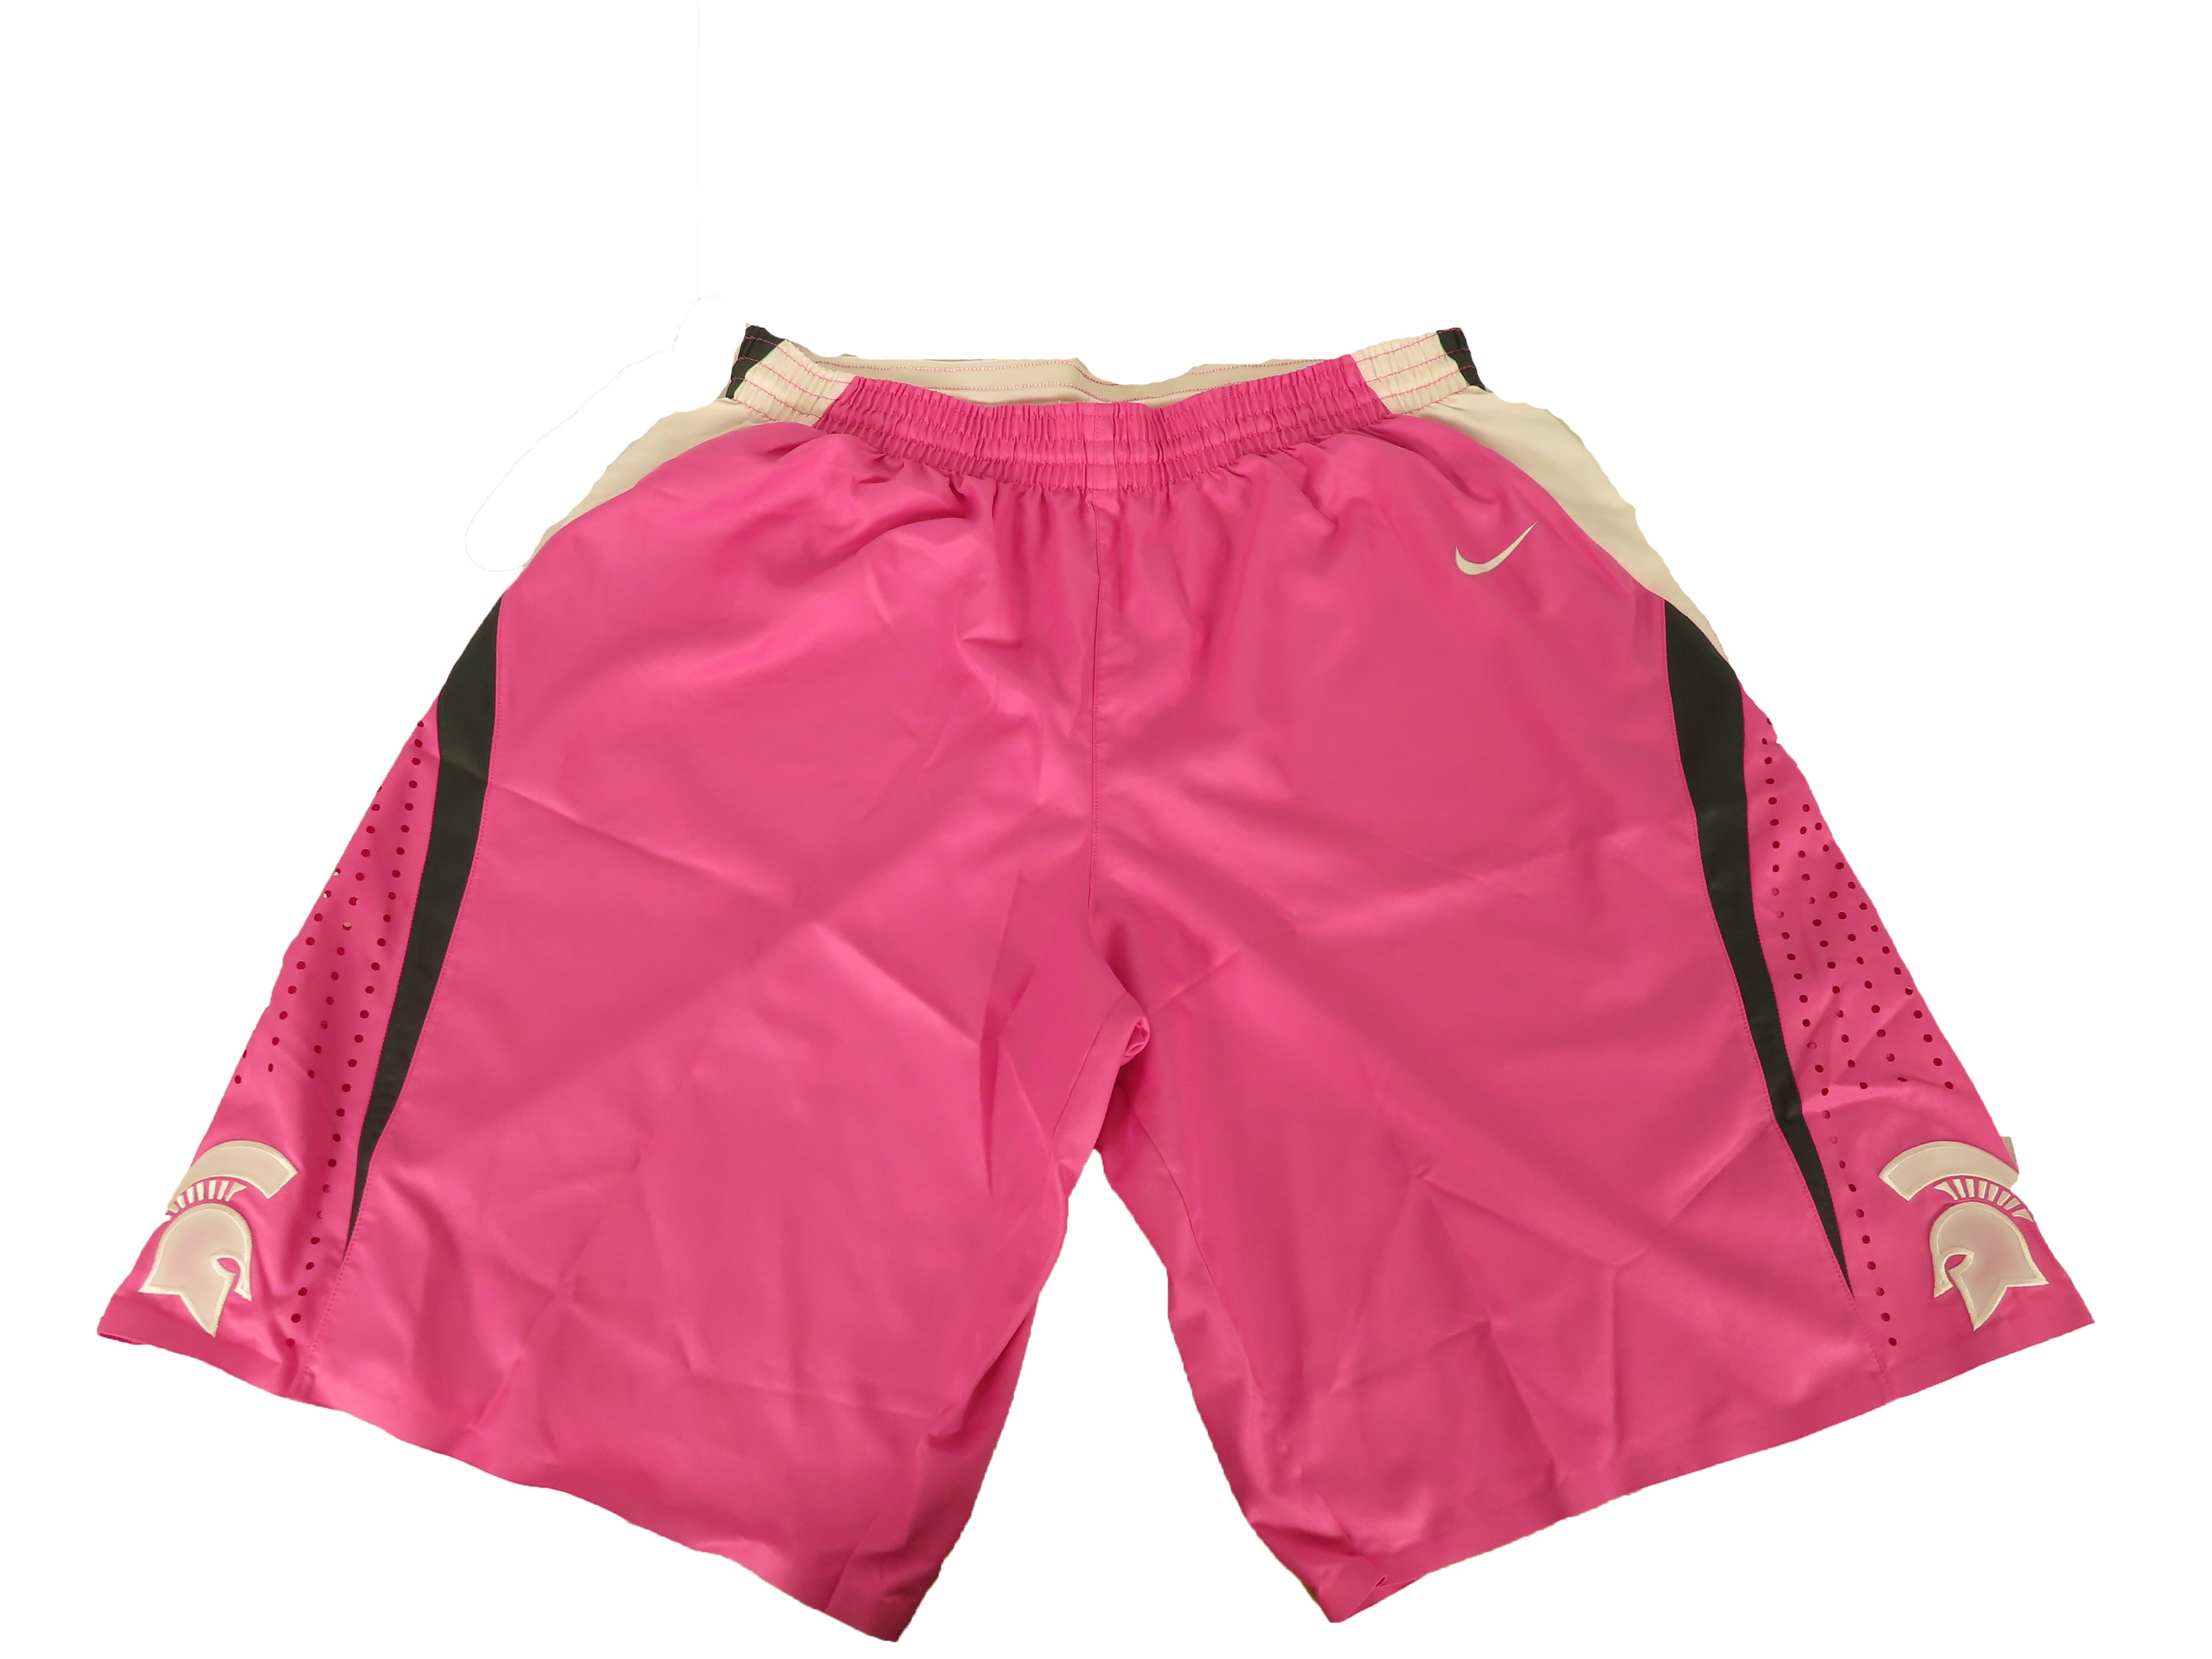 2012-2013 Nike Pink Authentic MSU Women's Basketball Shorts Size 36 +2L